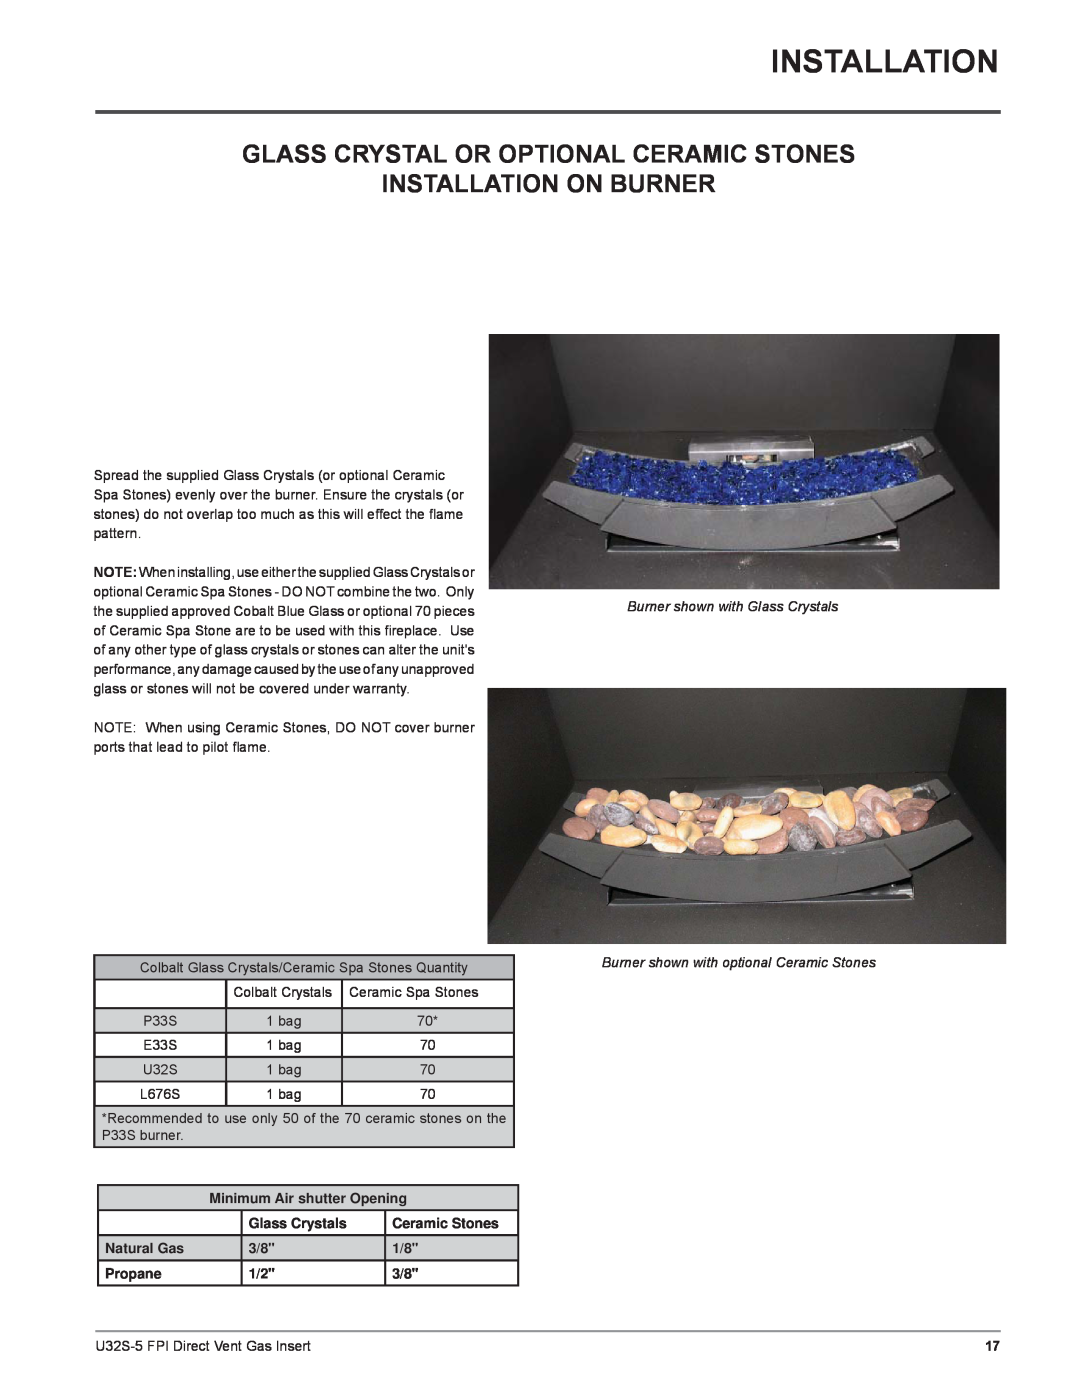 Regency U32S-LP5 Glass Crystal Or Optional Ceramic Stones, Installation On Burner, Minimum Air shutter Opening 